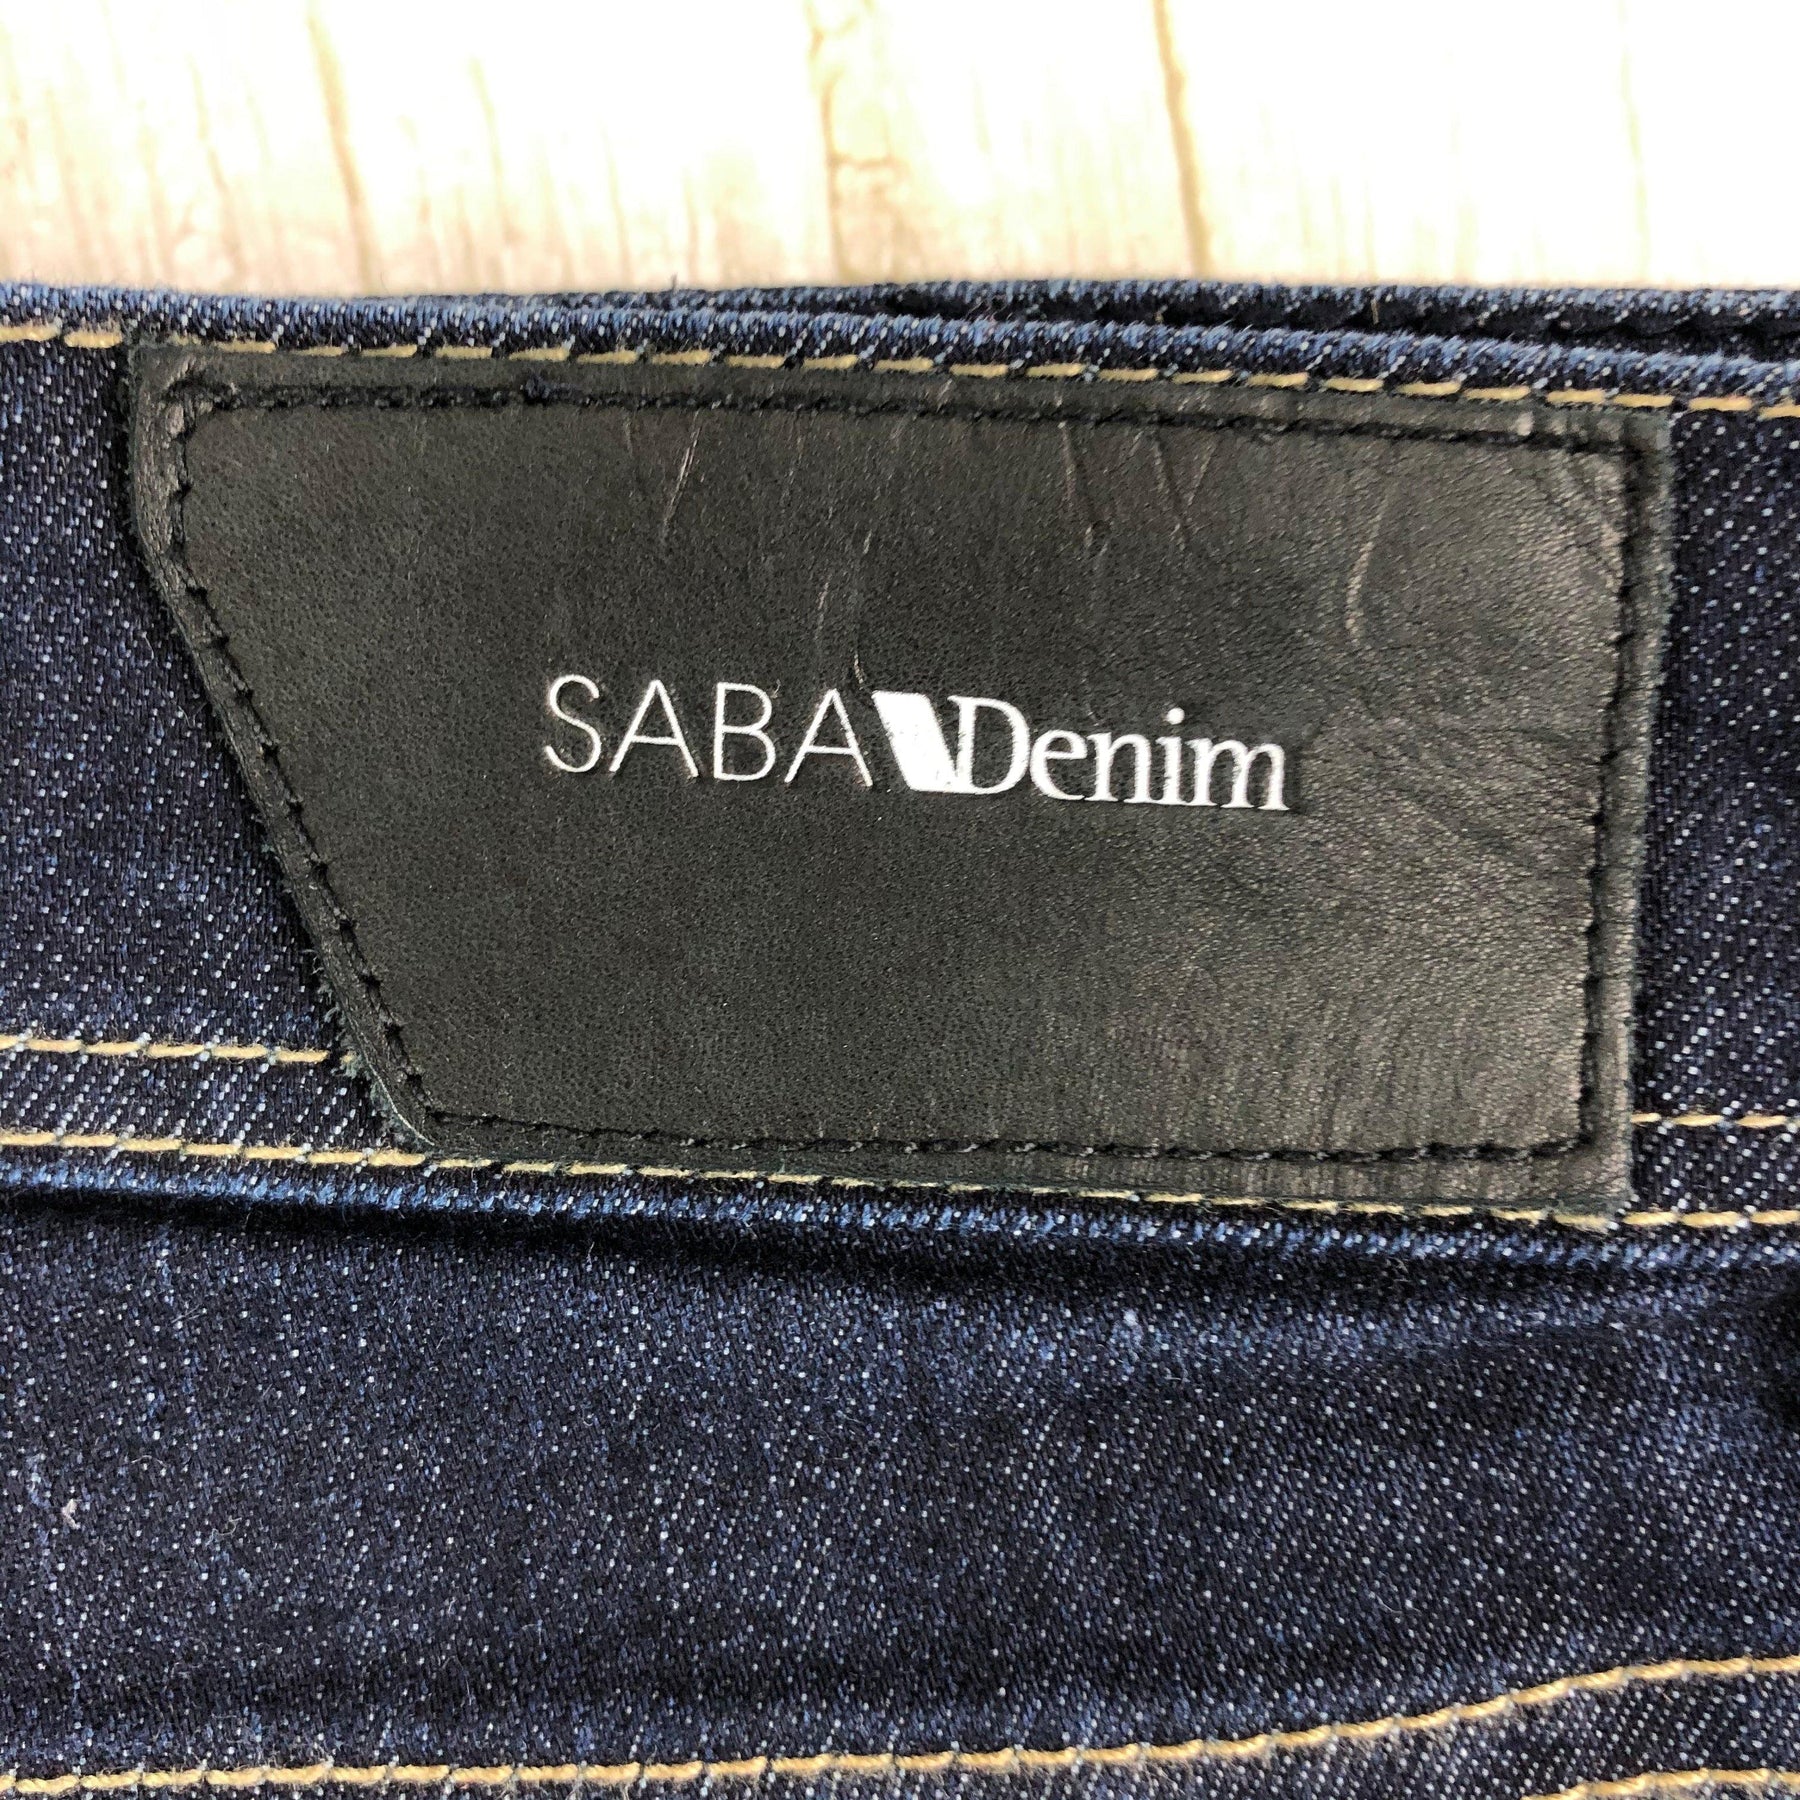 SABA Mid Rise Dark Wash Skinny Jeans -Size 30 – Jean Pool